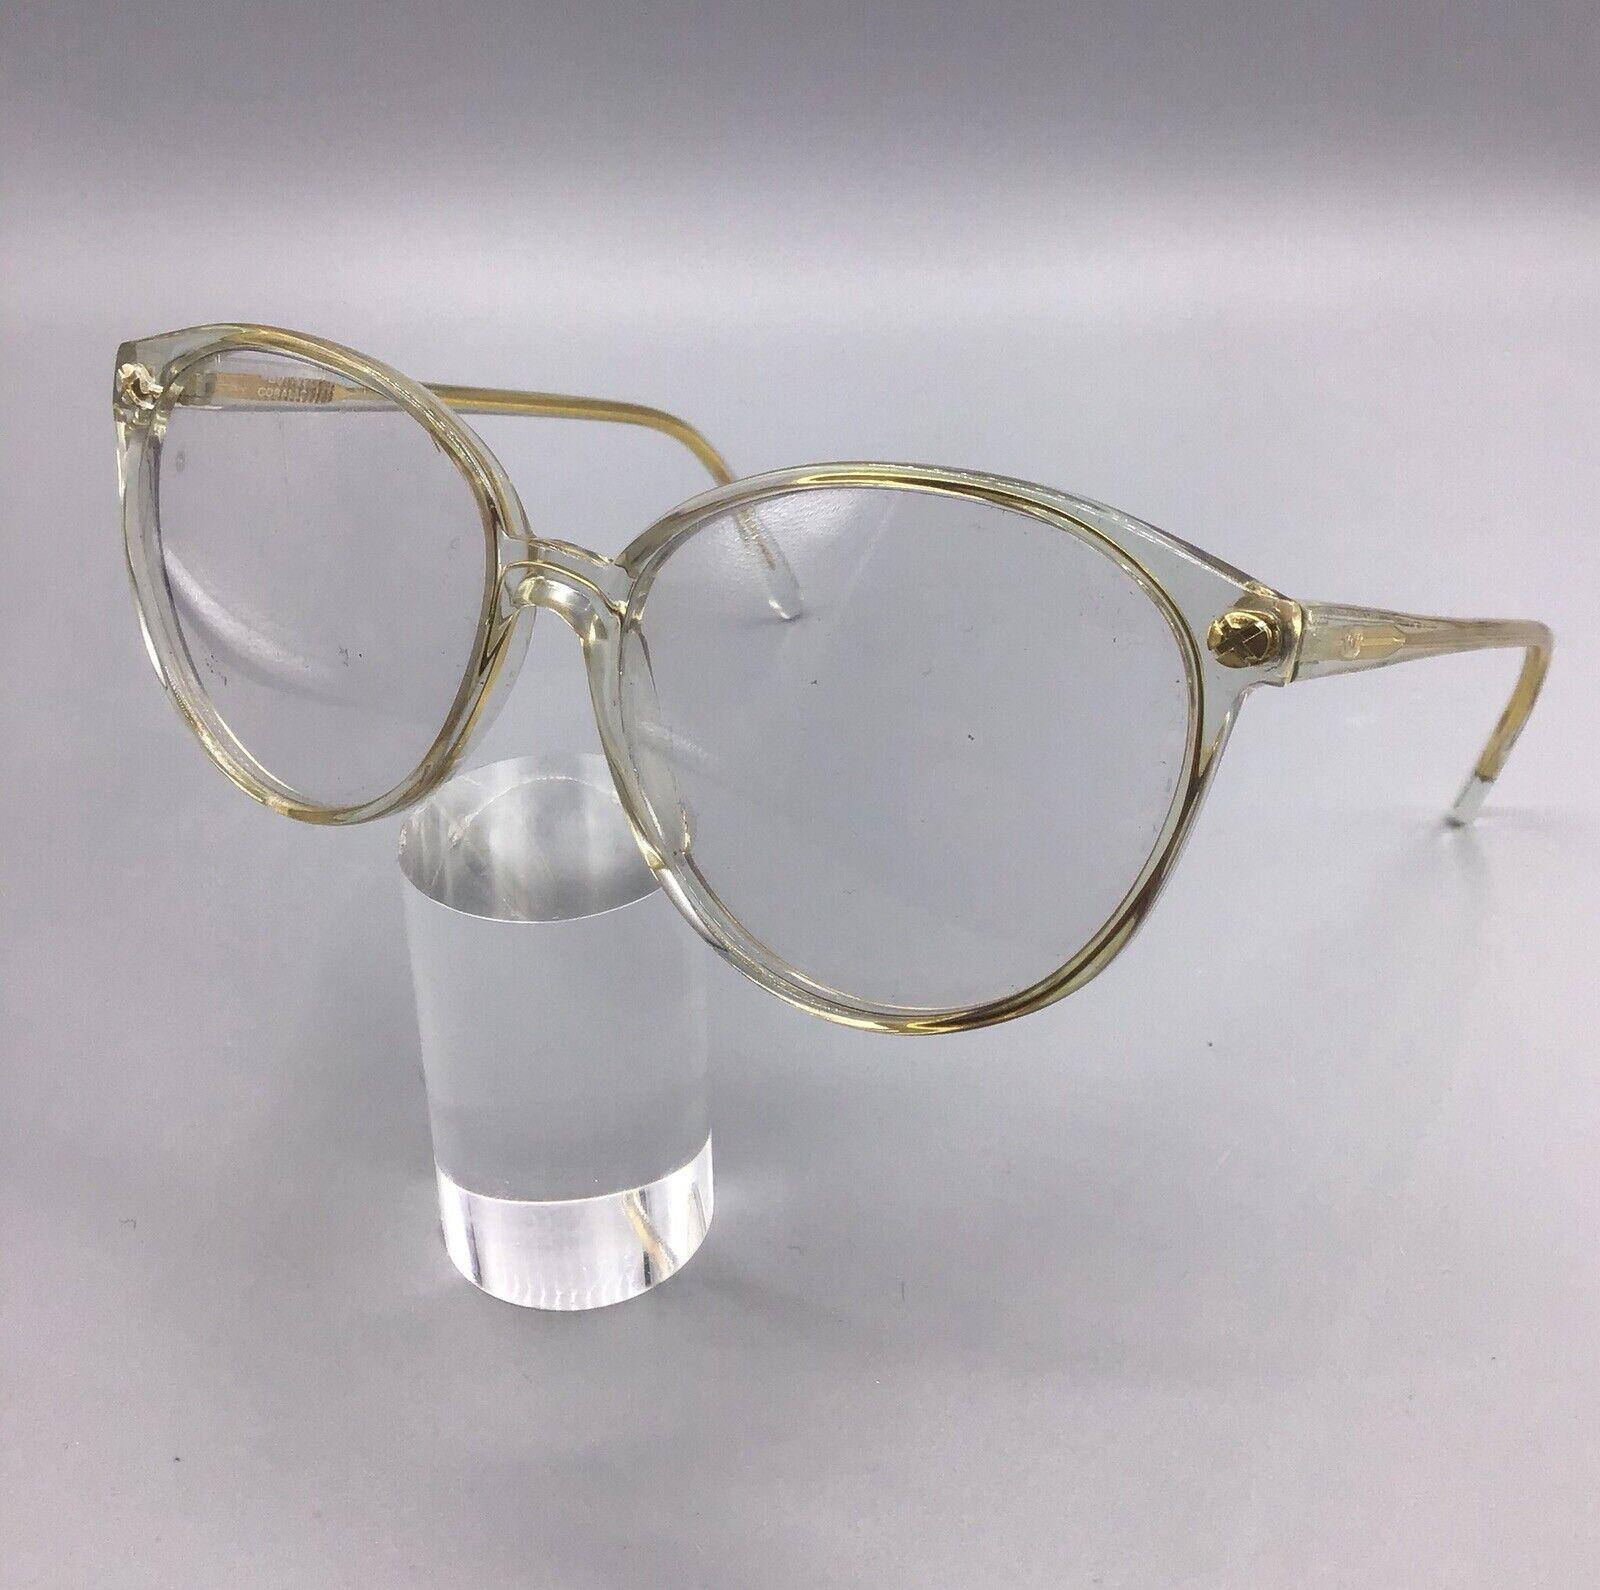 Morwen Filo de Oro Frame Italy occhiale eyewear brillen lunettes CORALLO